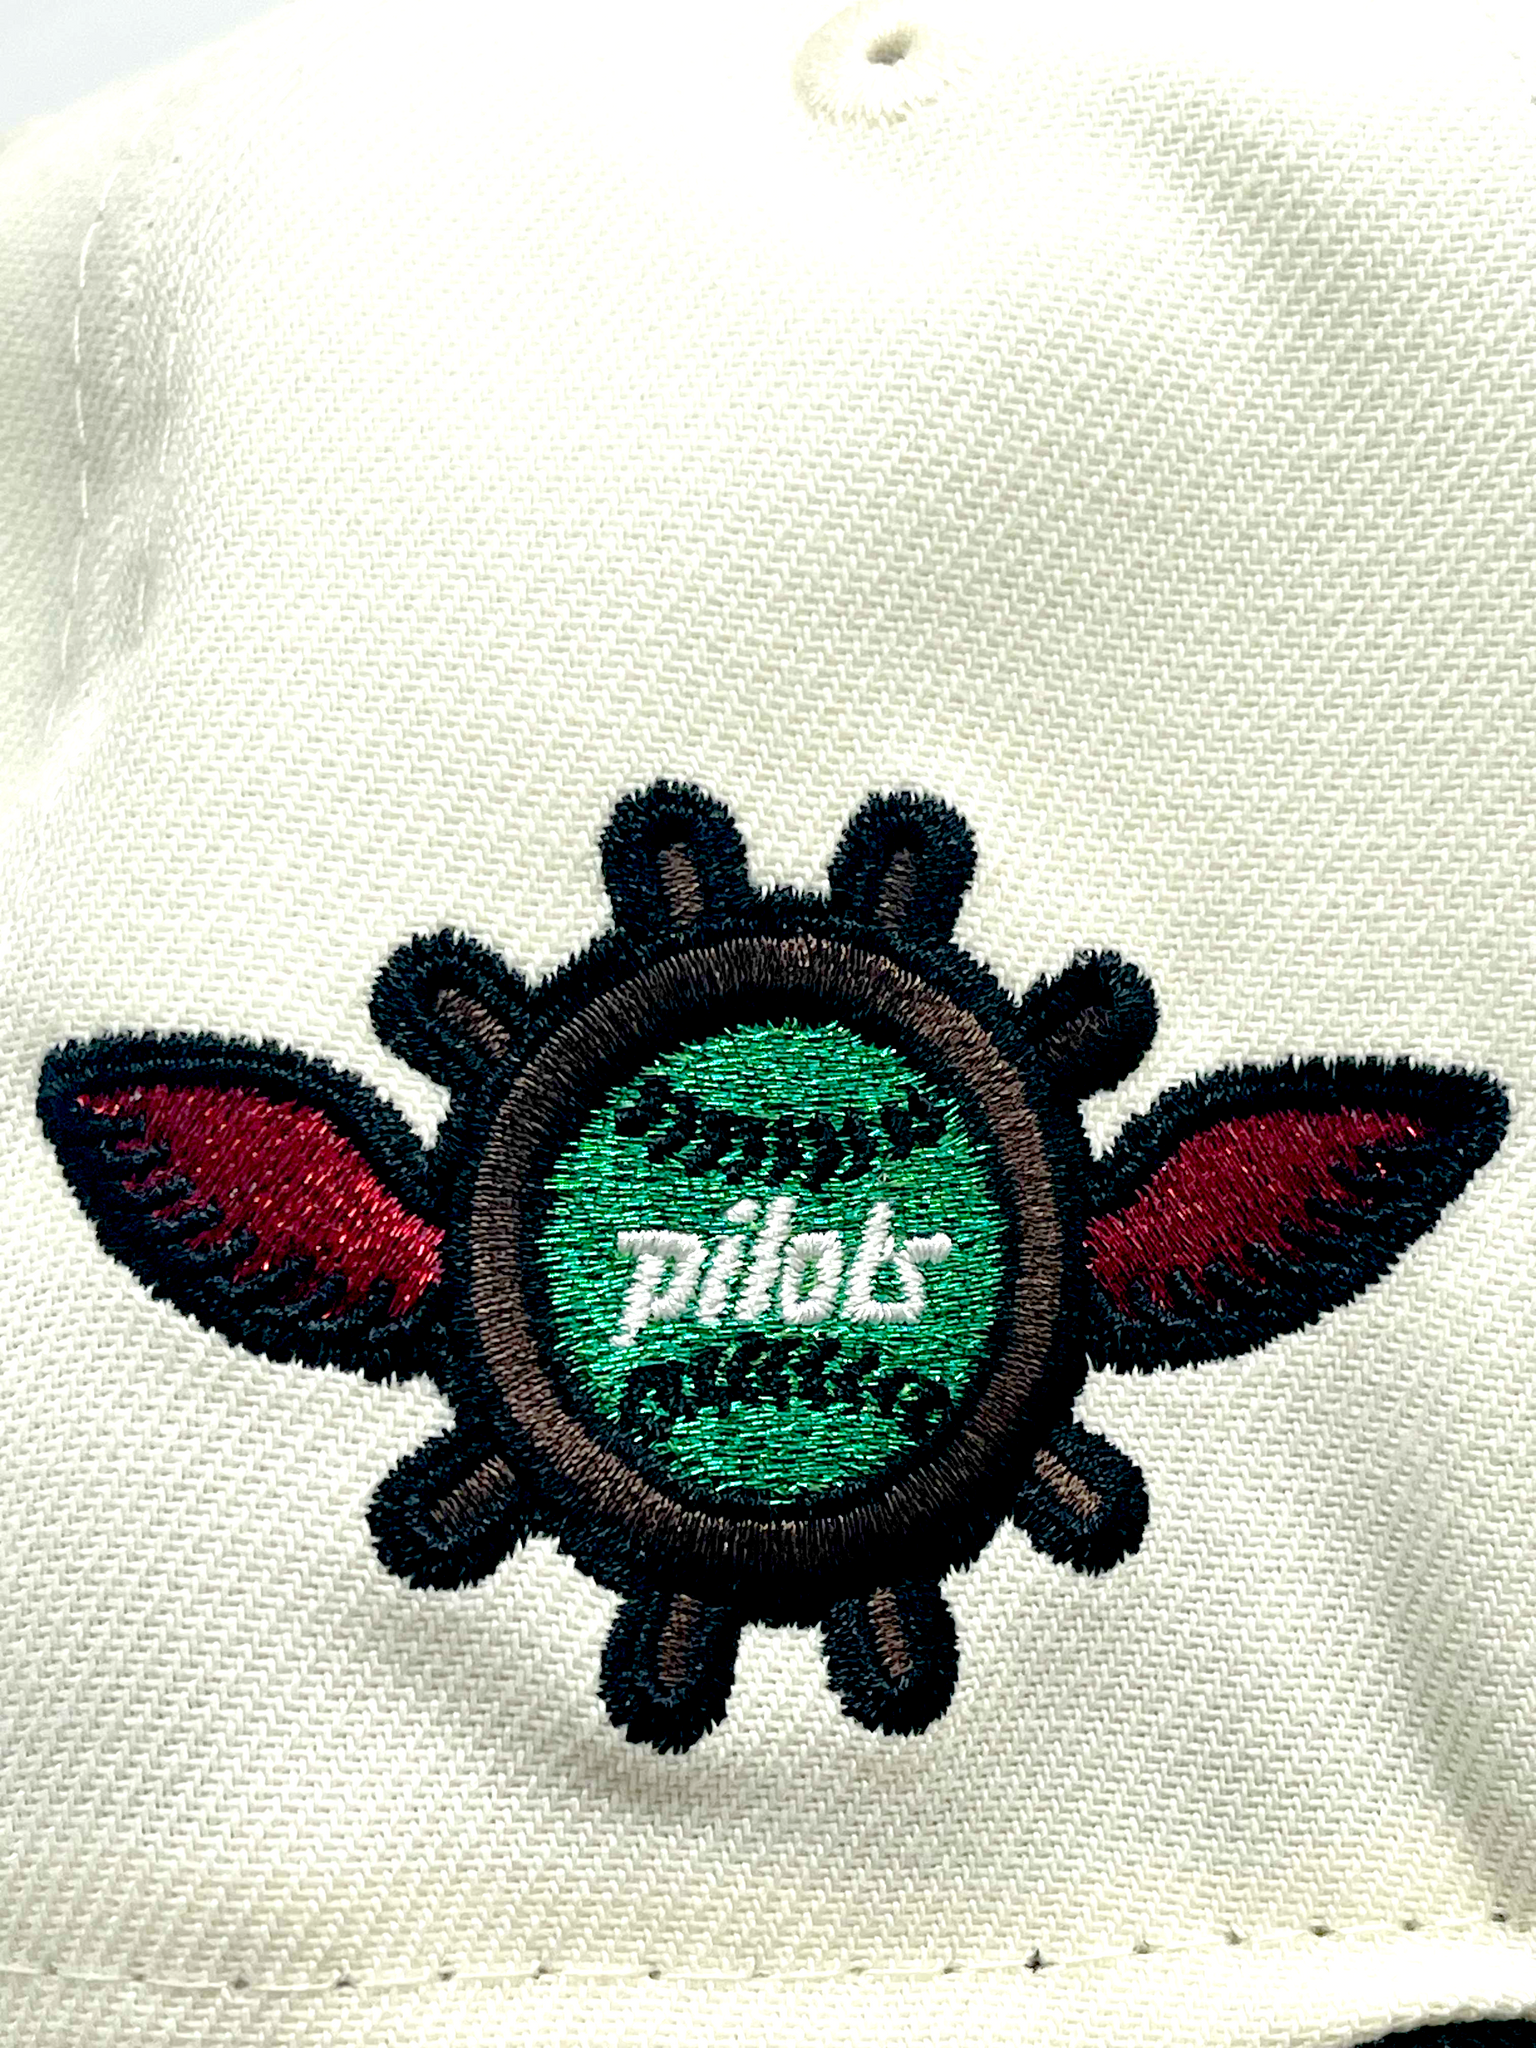 seattle pilots merchandise